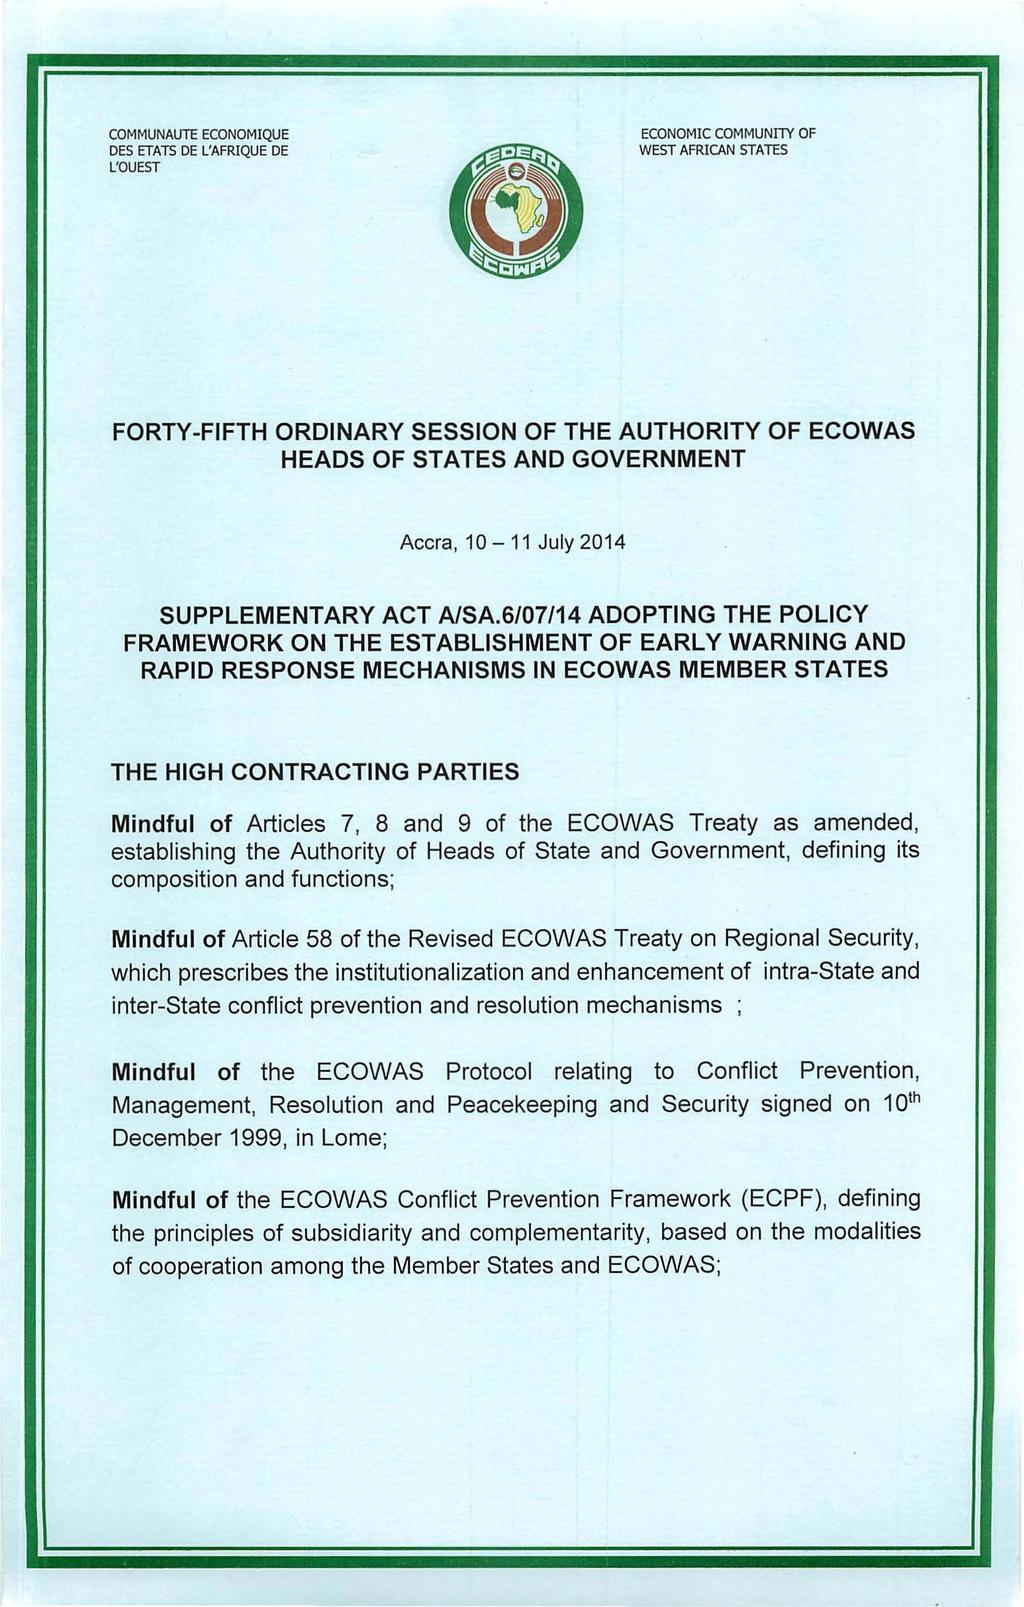 COMMUNAUTE ECONOMIQUE DES ETATS DE L'AFRIQUE DE L'OUEST ECONOMIC COMMUNffi OF WEST AFRICAN STATES FORTY-FIFTH ORDINARY SESSION OF THE AUTHORITY OF ECOWAS HEADS OF STATES AND GOVERNMENT Accra, 10-11